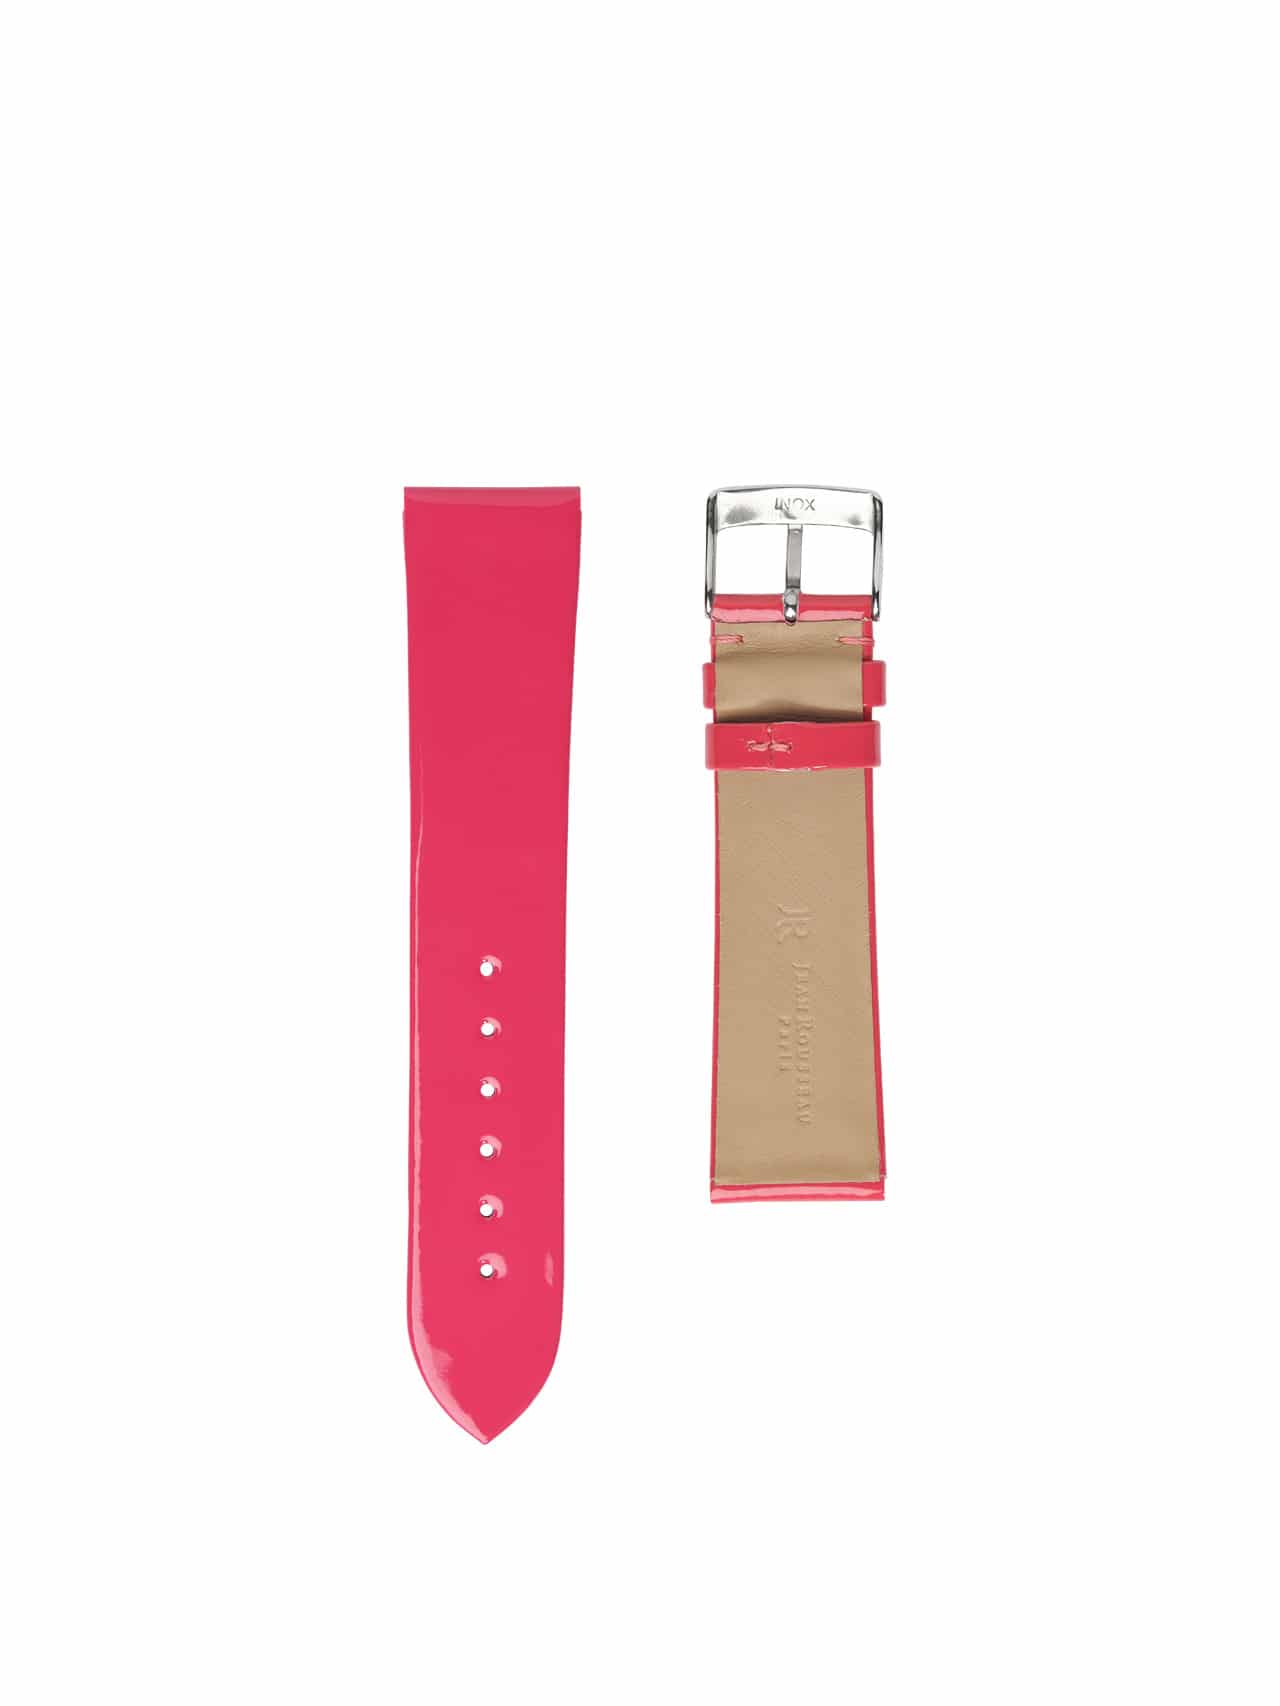 watch band Patent leather pink bright women